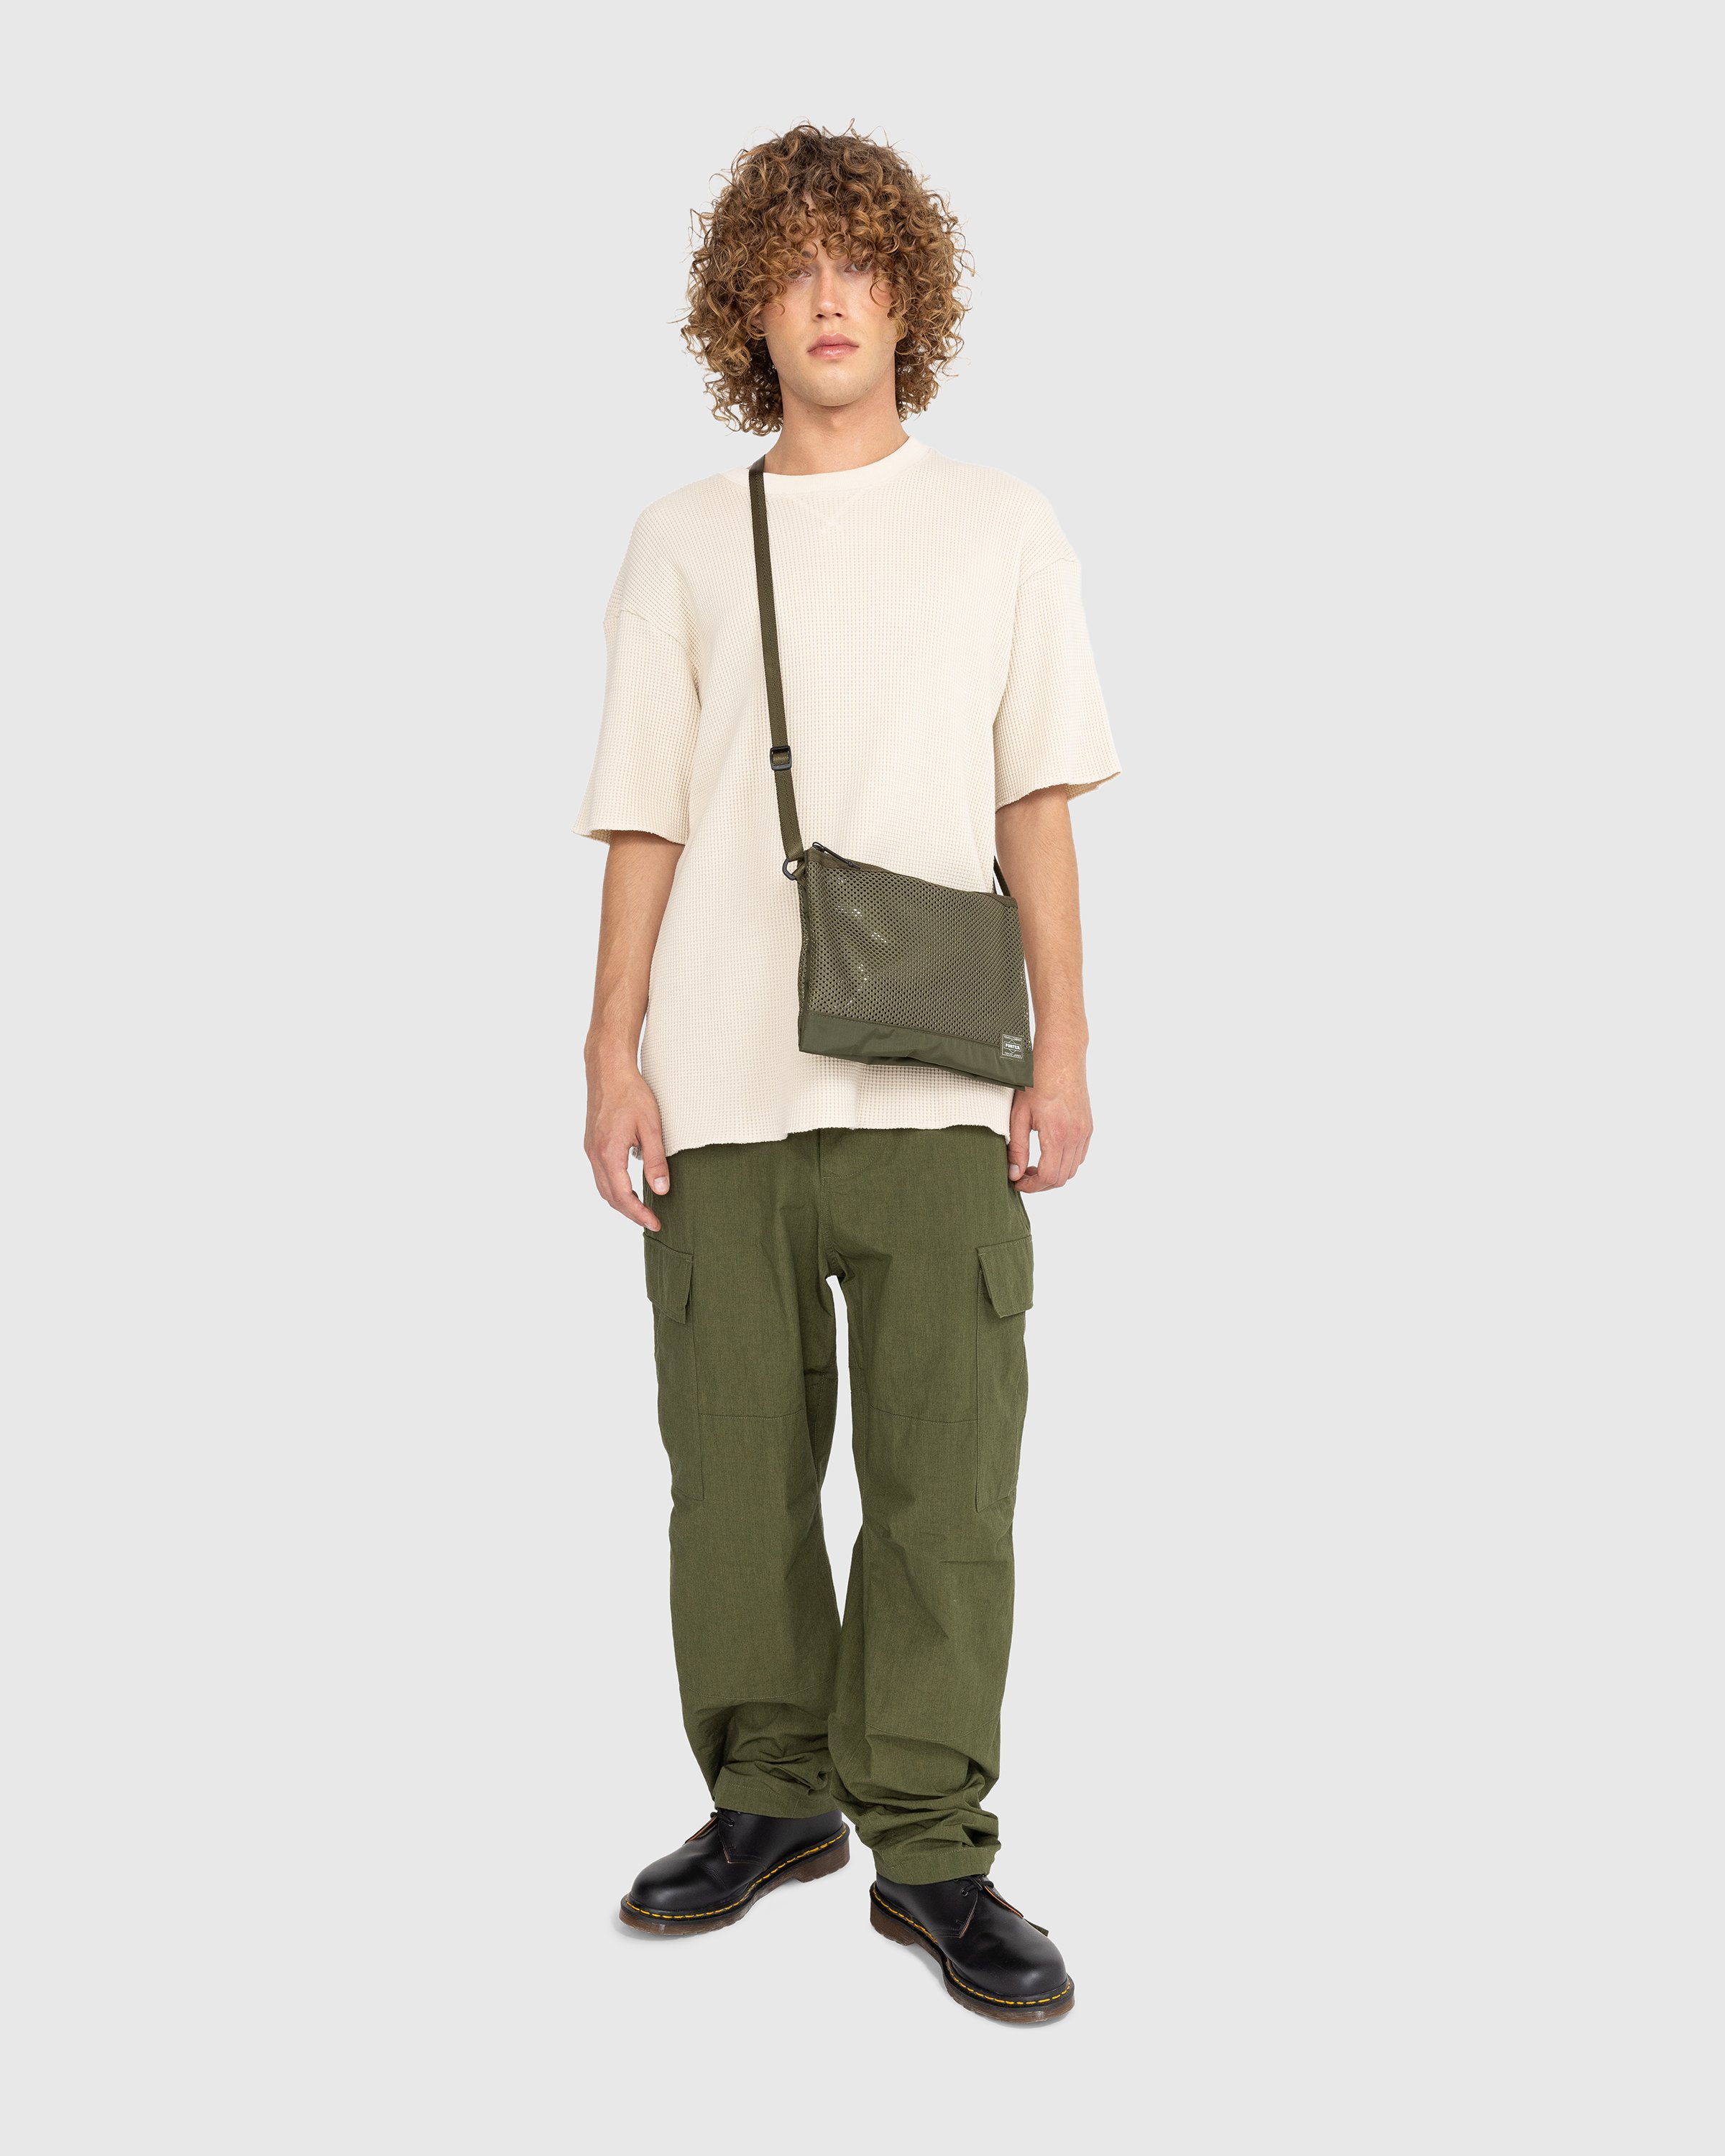 Porter-Yoshida & Co. - Sacoche Screen Shoulder Bag Green - Accessories - Green - Image 4